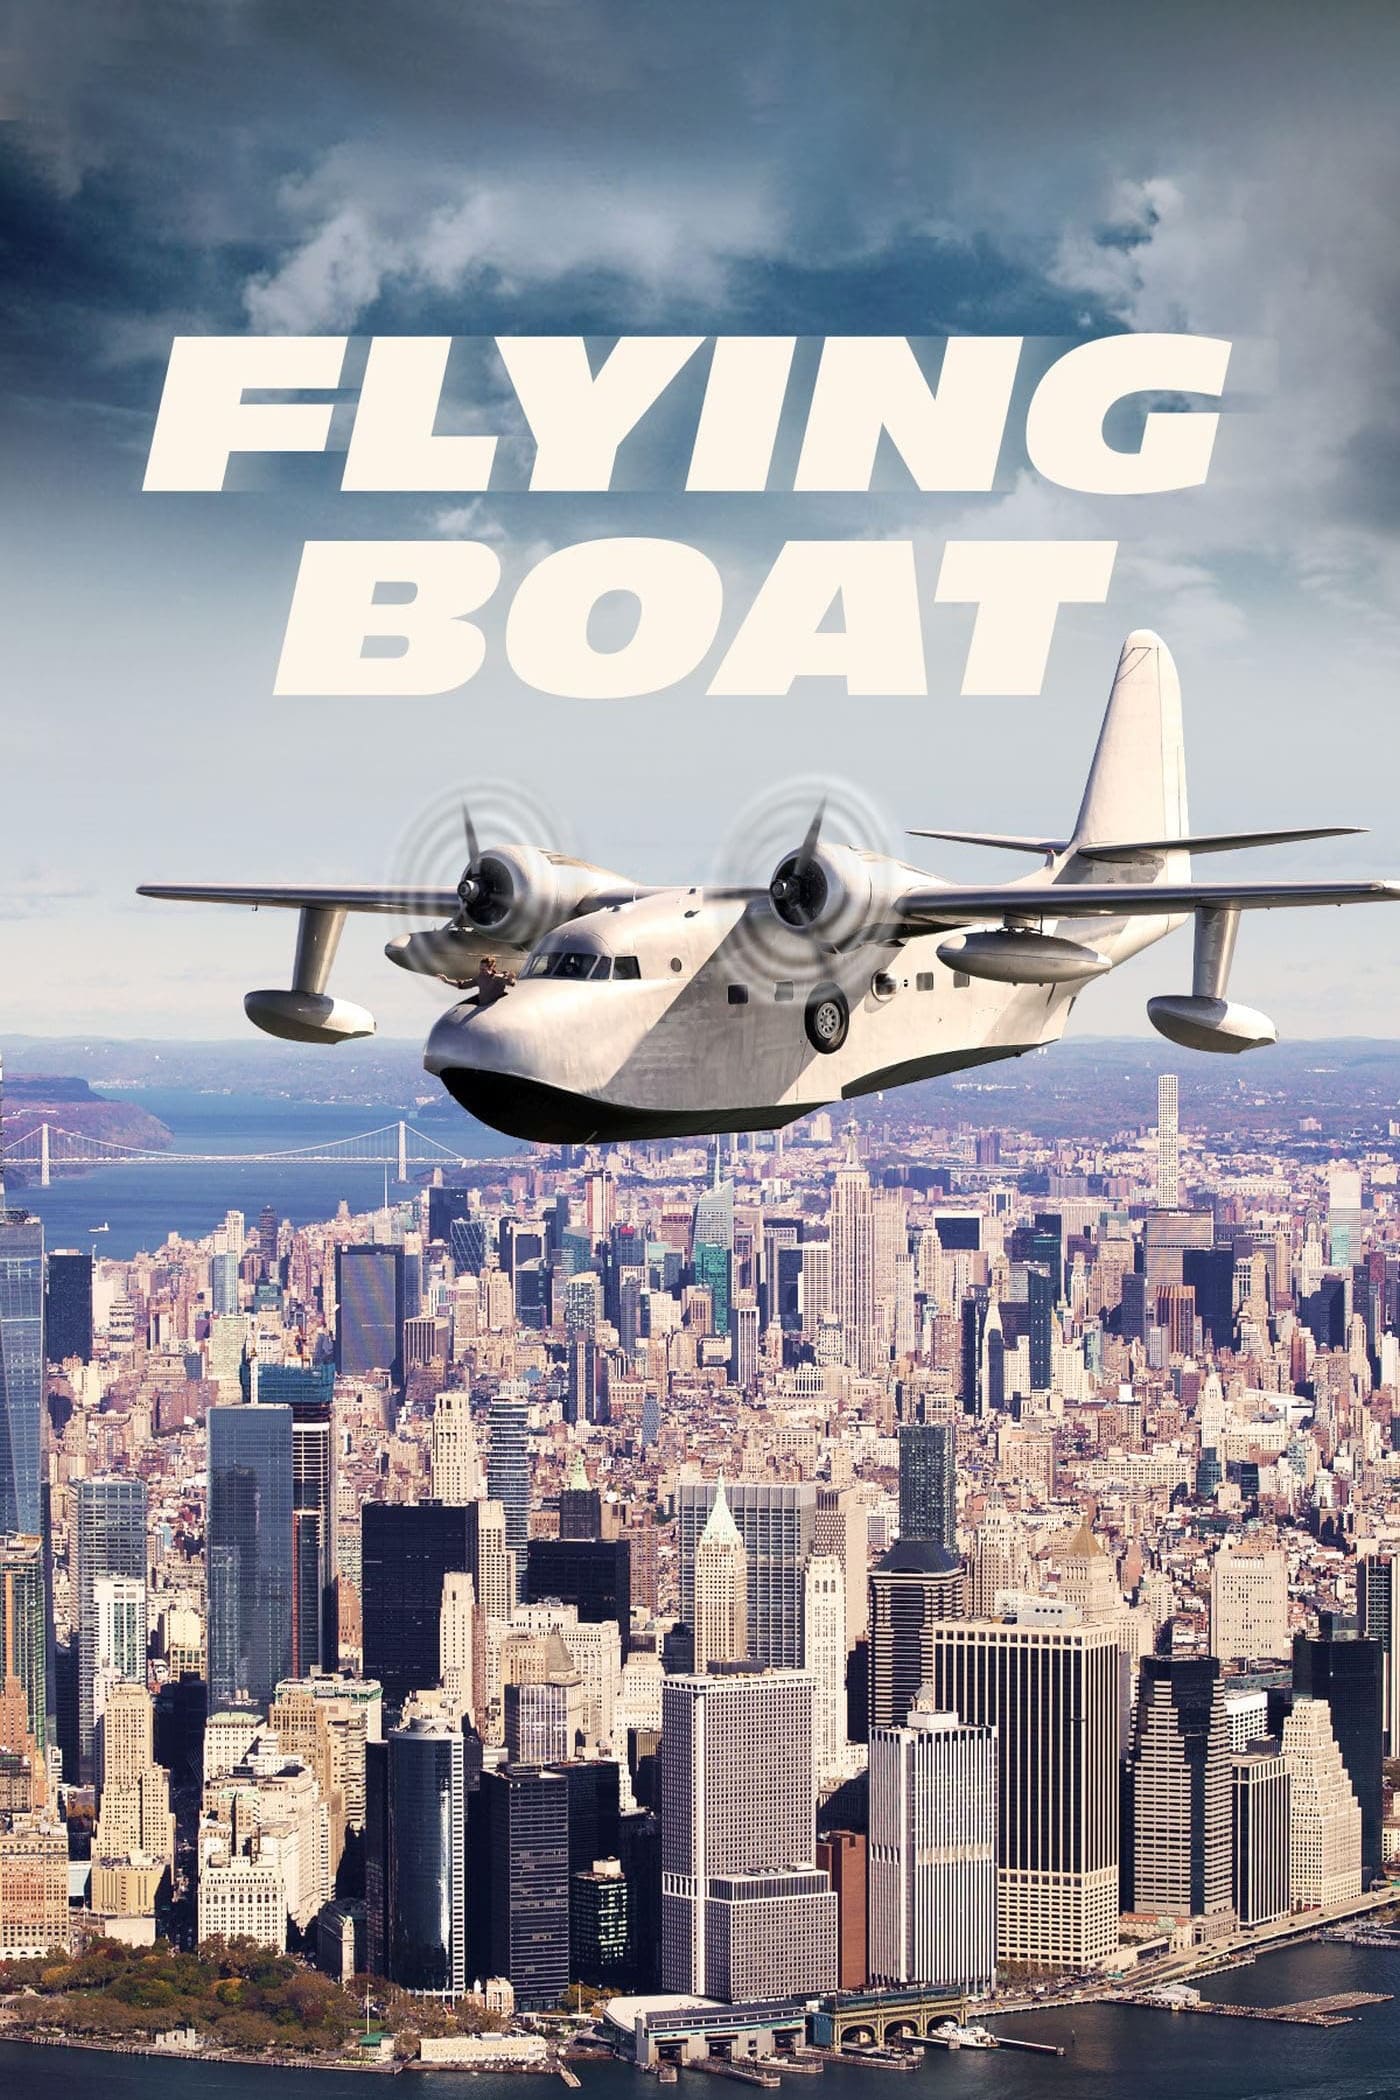 Flying Boat